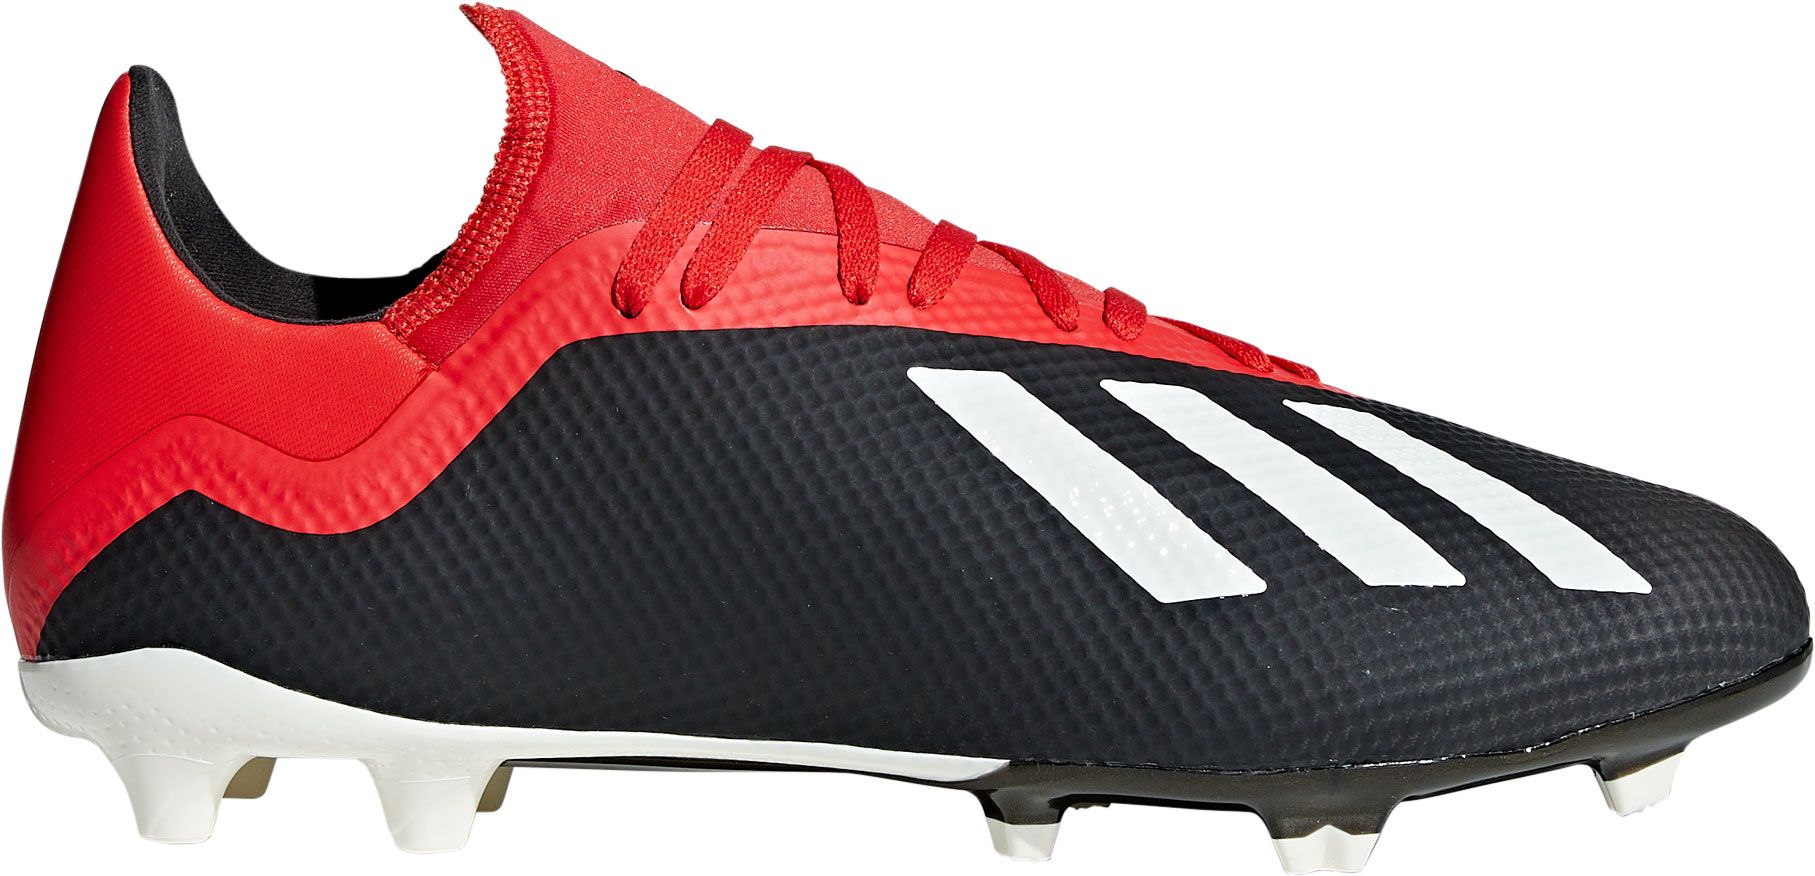 adidas men's x 18.3 fg soccer cleats black